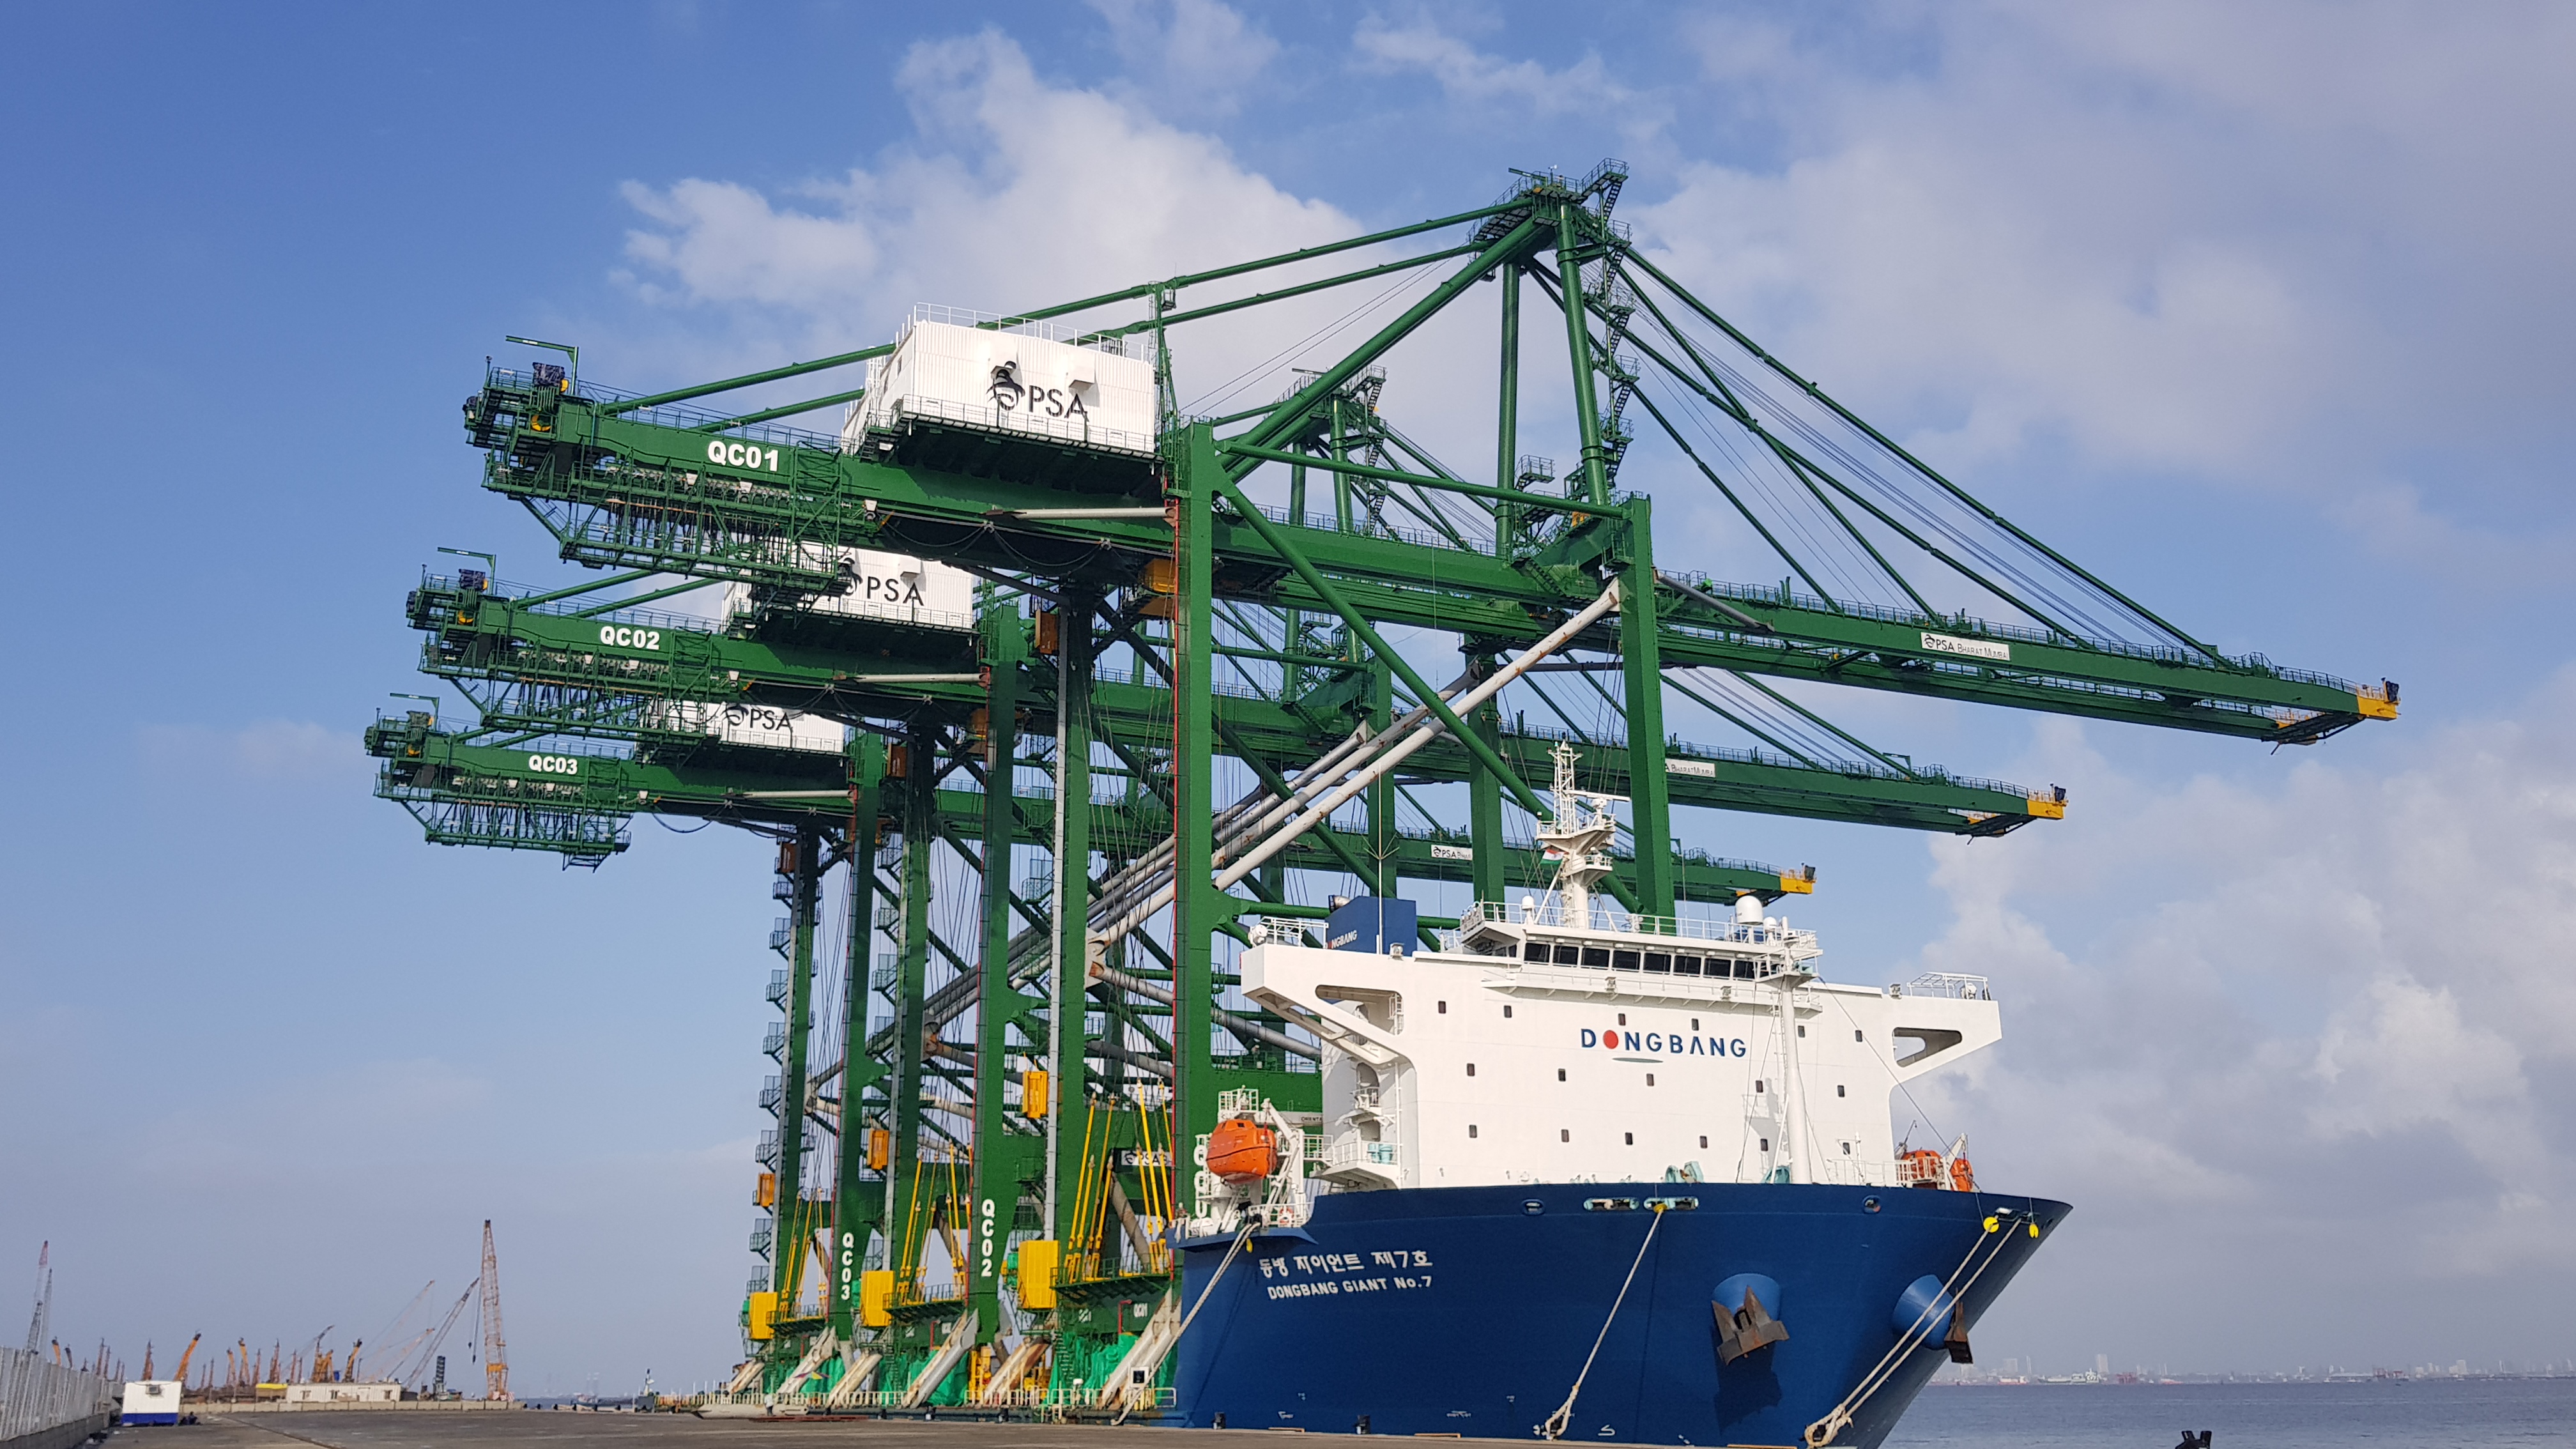 "Made in Vietnam" cargo container cranes arrive at India